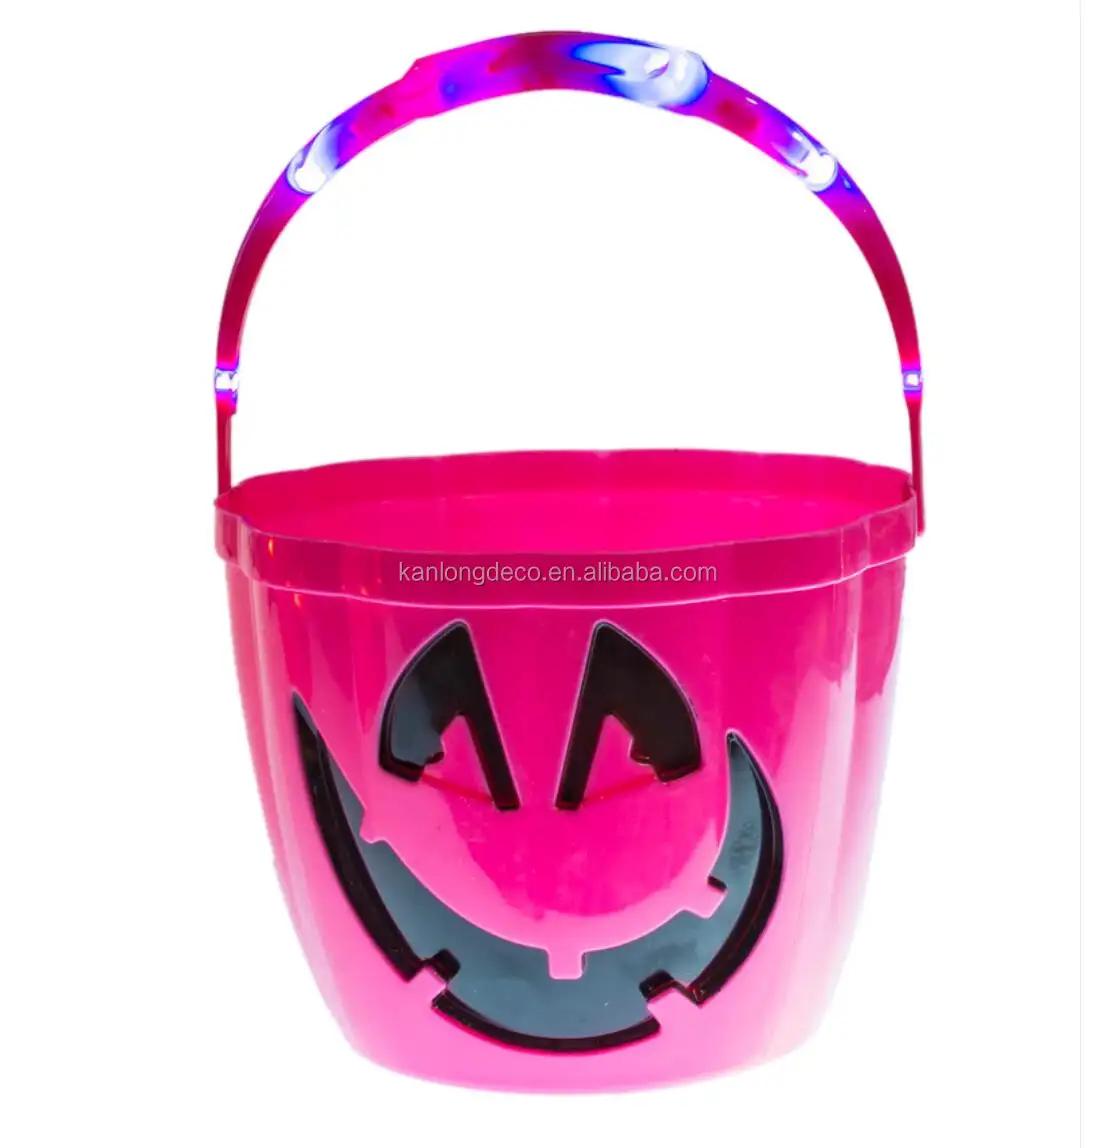 Kanlong factory price LED halloween flashing Candy pumpkin bucket for Halloween deco